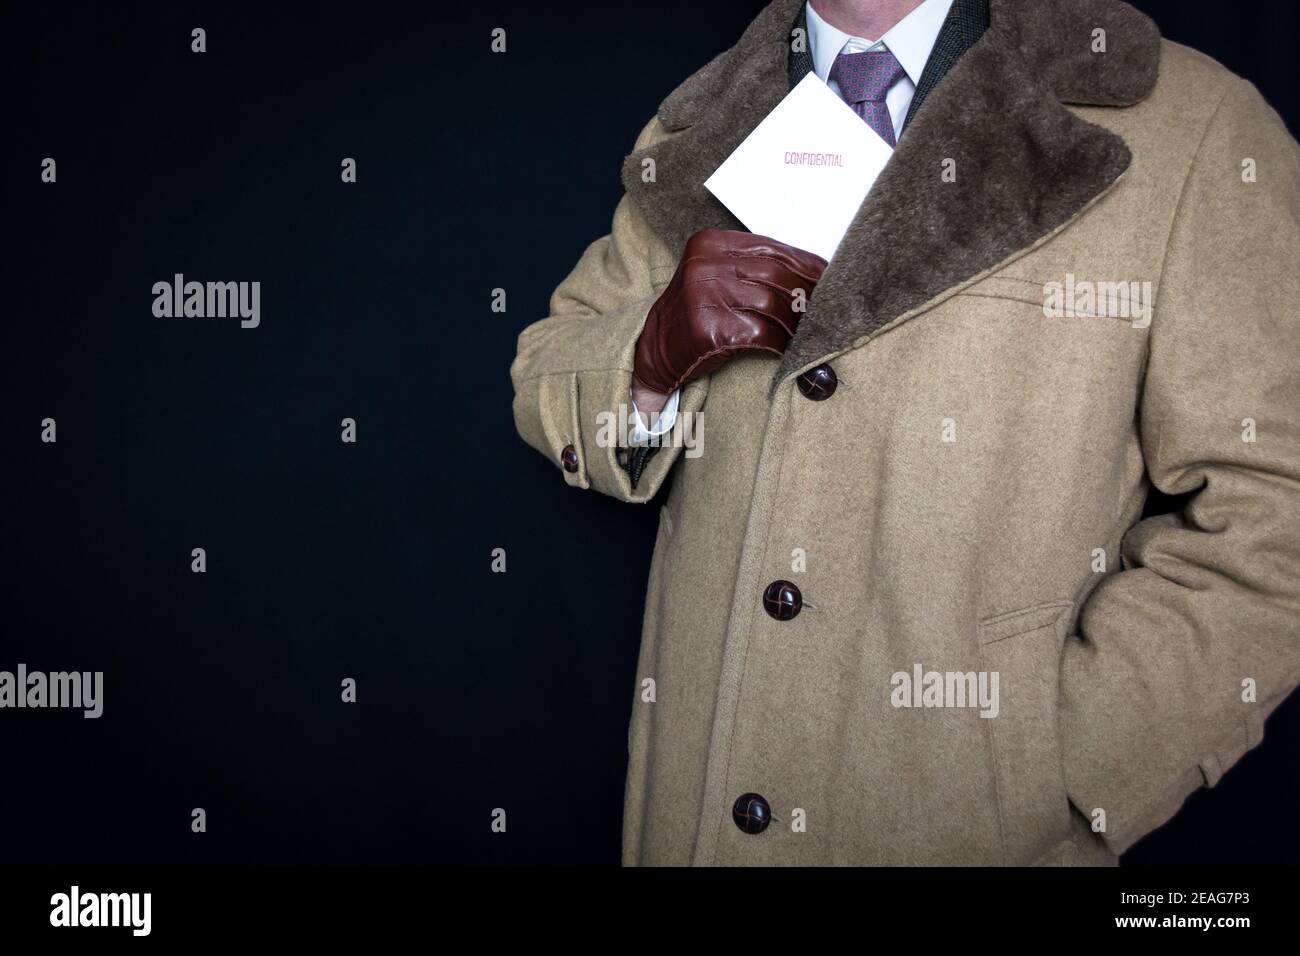 Portrait of Man in Fur Coat and Leather Gloves Pulling Confidential Envelope out of Pocket on Black Background. Film Noir Secret Agent Spy. Stock Photo